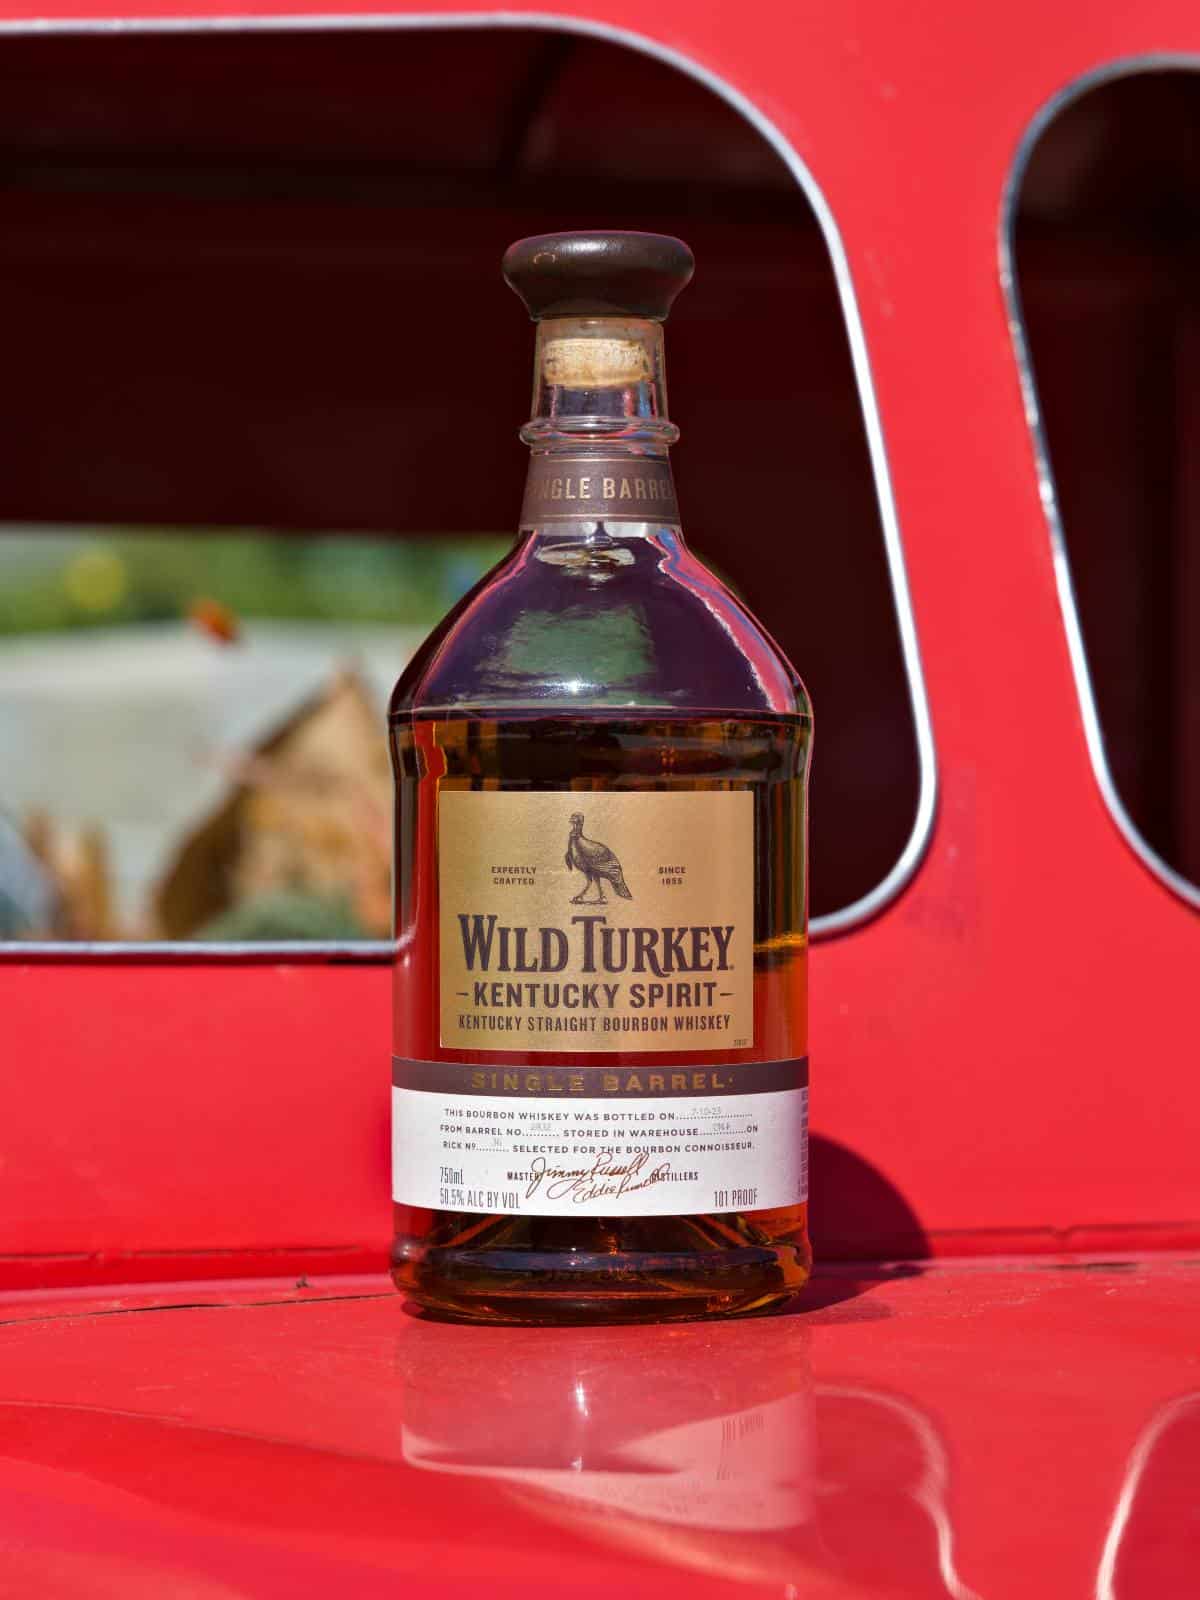 Wild Turkey Kentucky Spirit featured